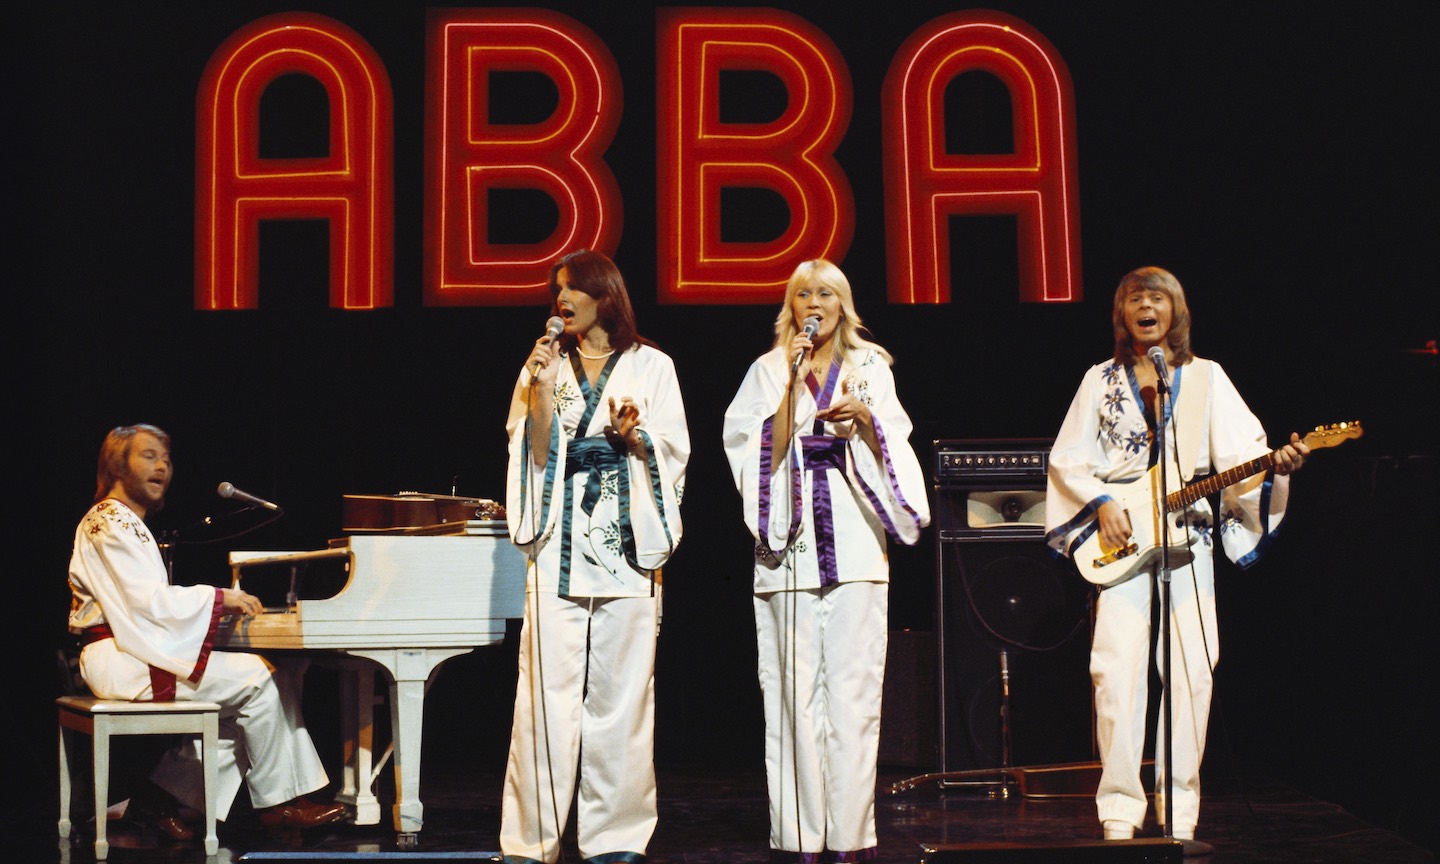 ABBA : r/japan_insoul